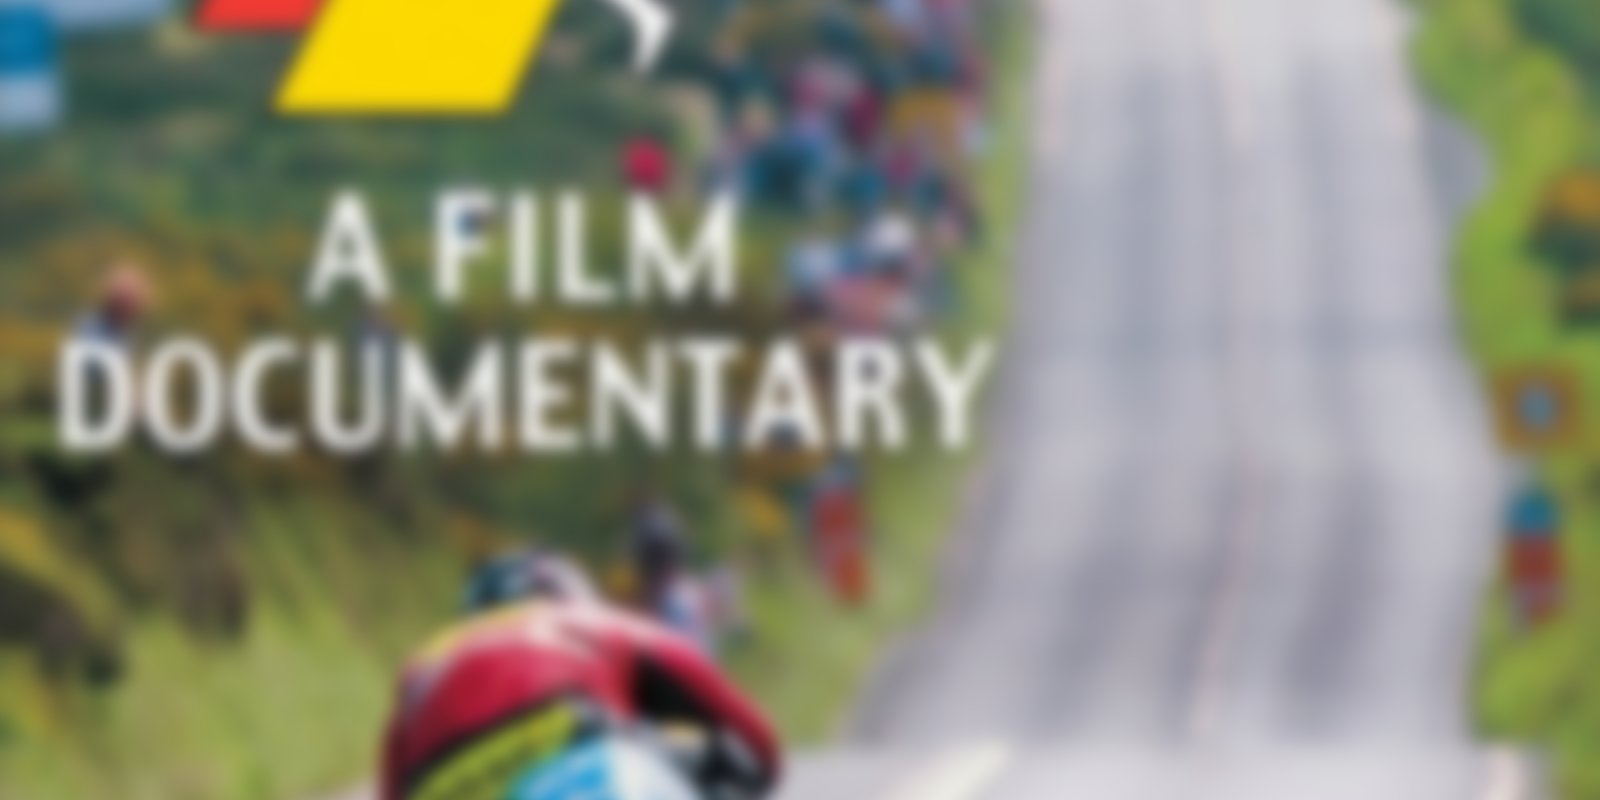 TT - A Film Documentary